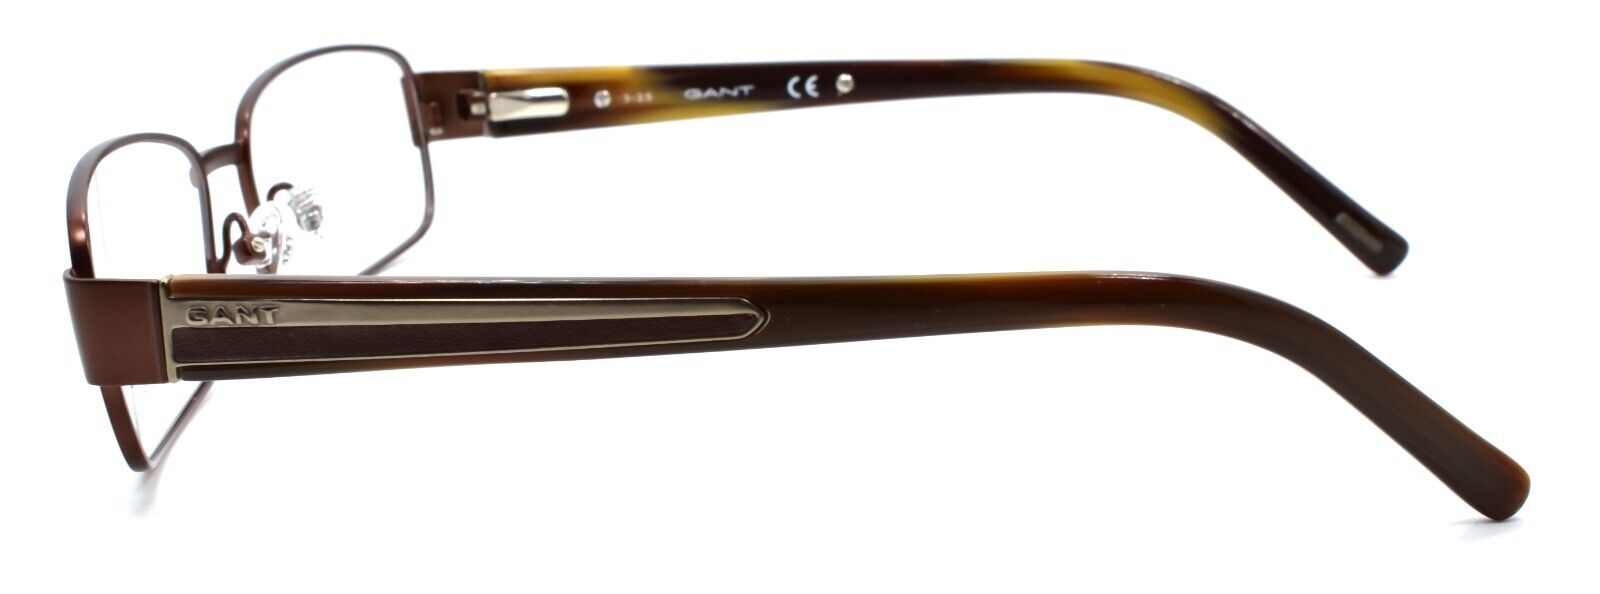 3-GANT G Abner SBRN Men's Eyeglasses Frames 55-15-140 Satin Brown-715583289574-IKSpecs